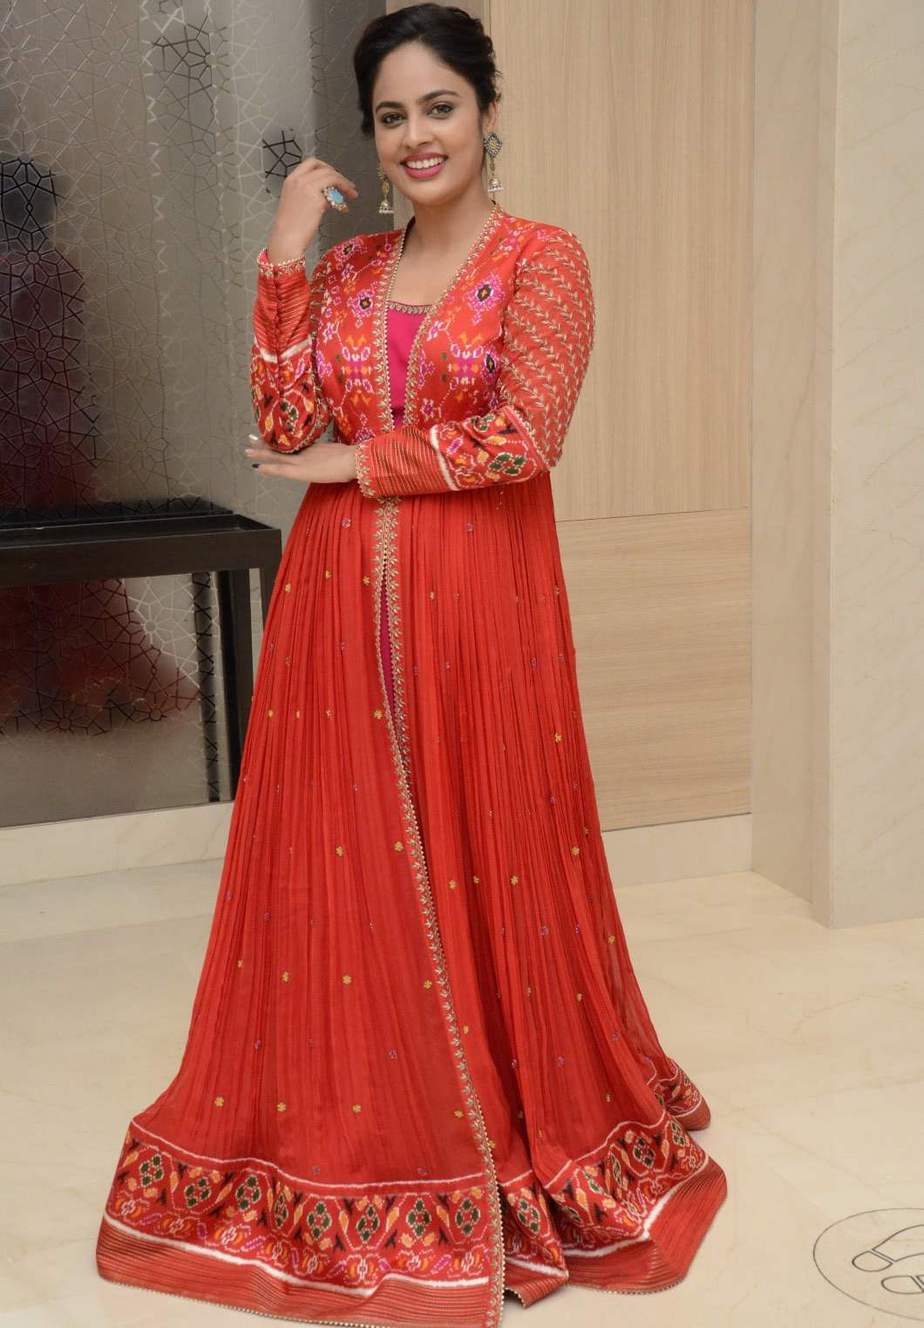 nandita swetha at Kapatadhaari Movie Pre-Release event in gown